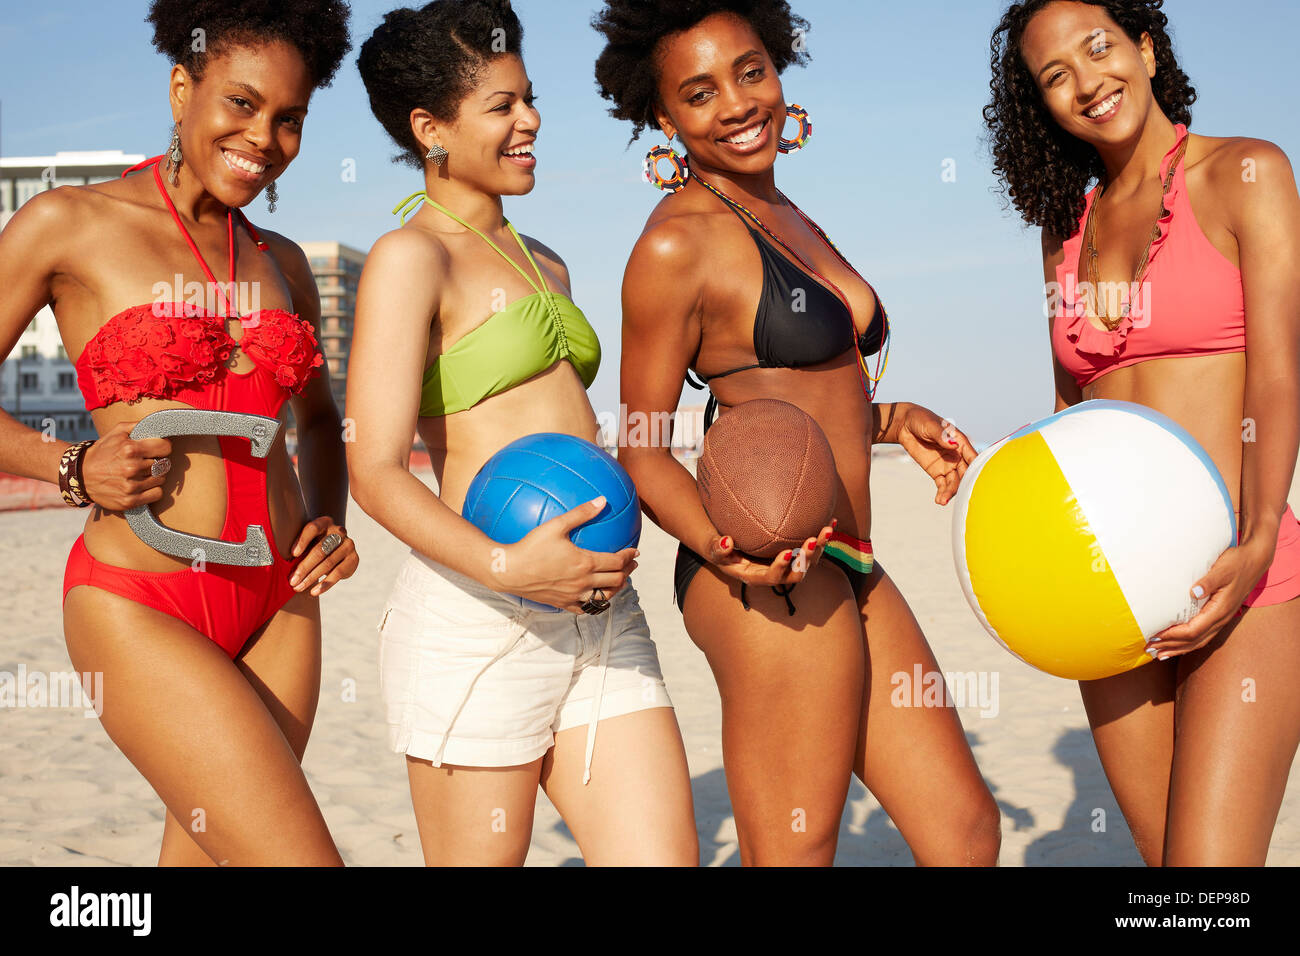 Women holding balls on beach Stock Photo - Alamy